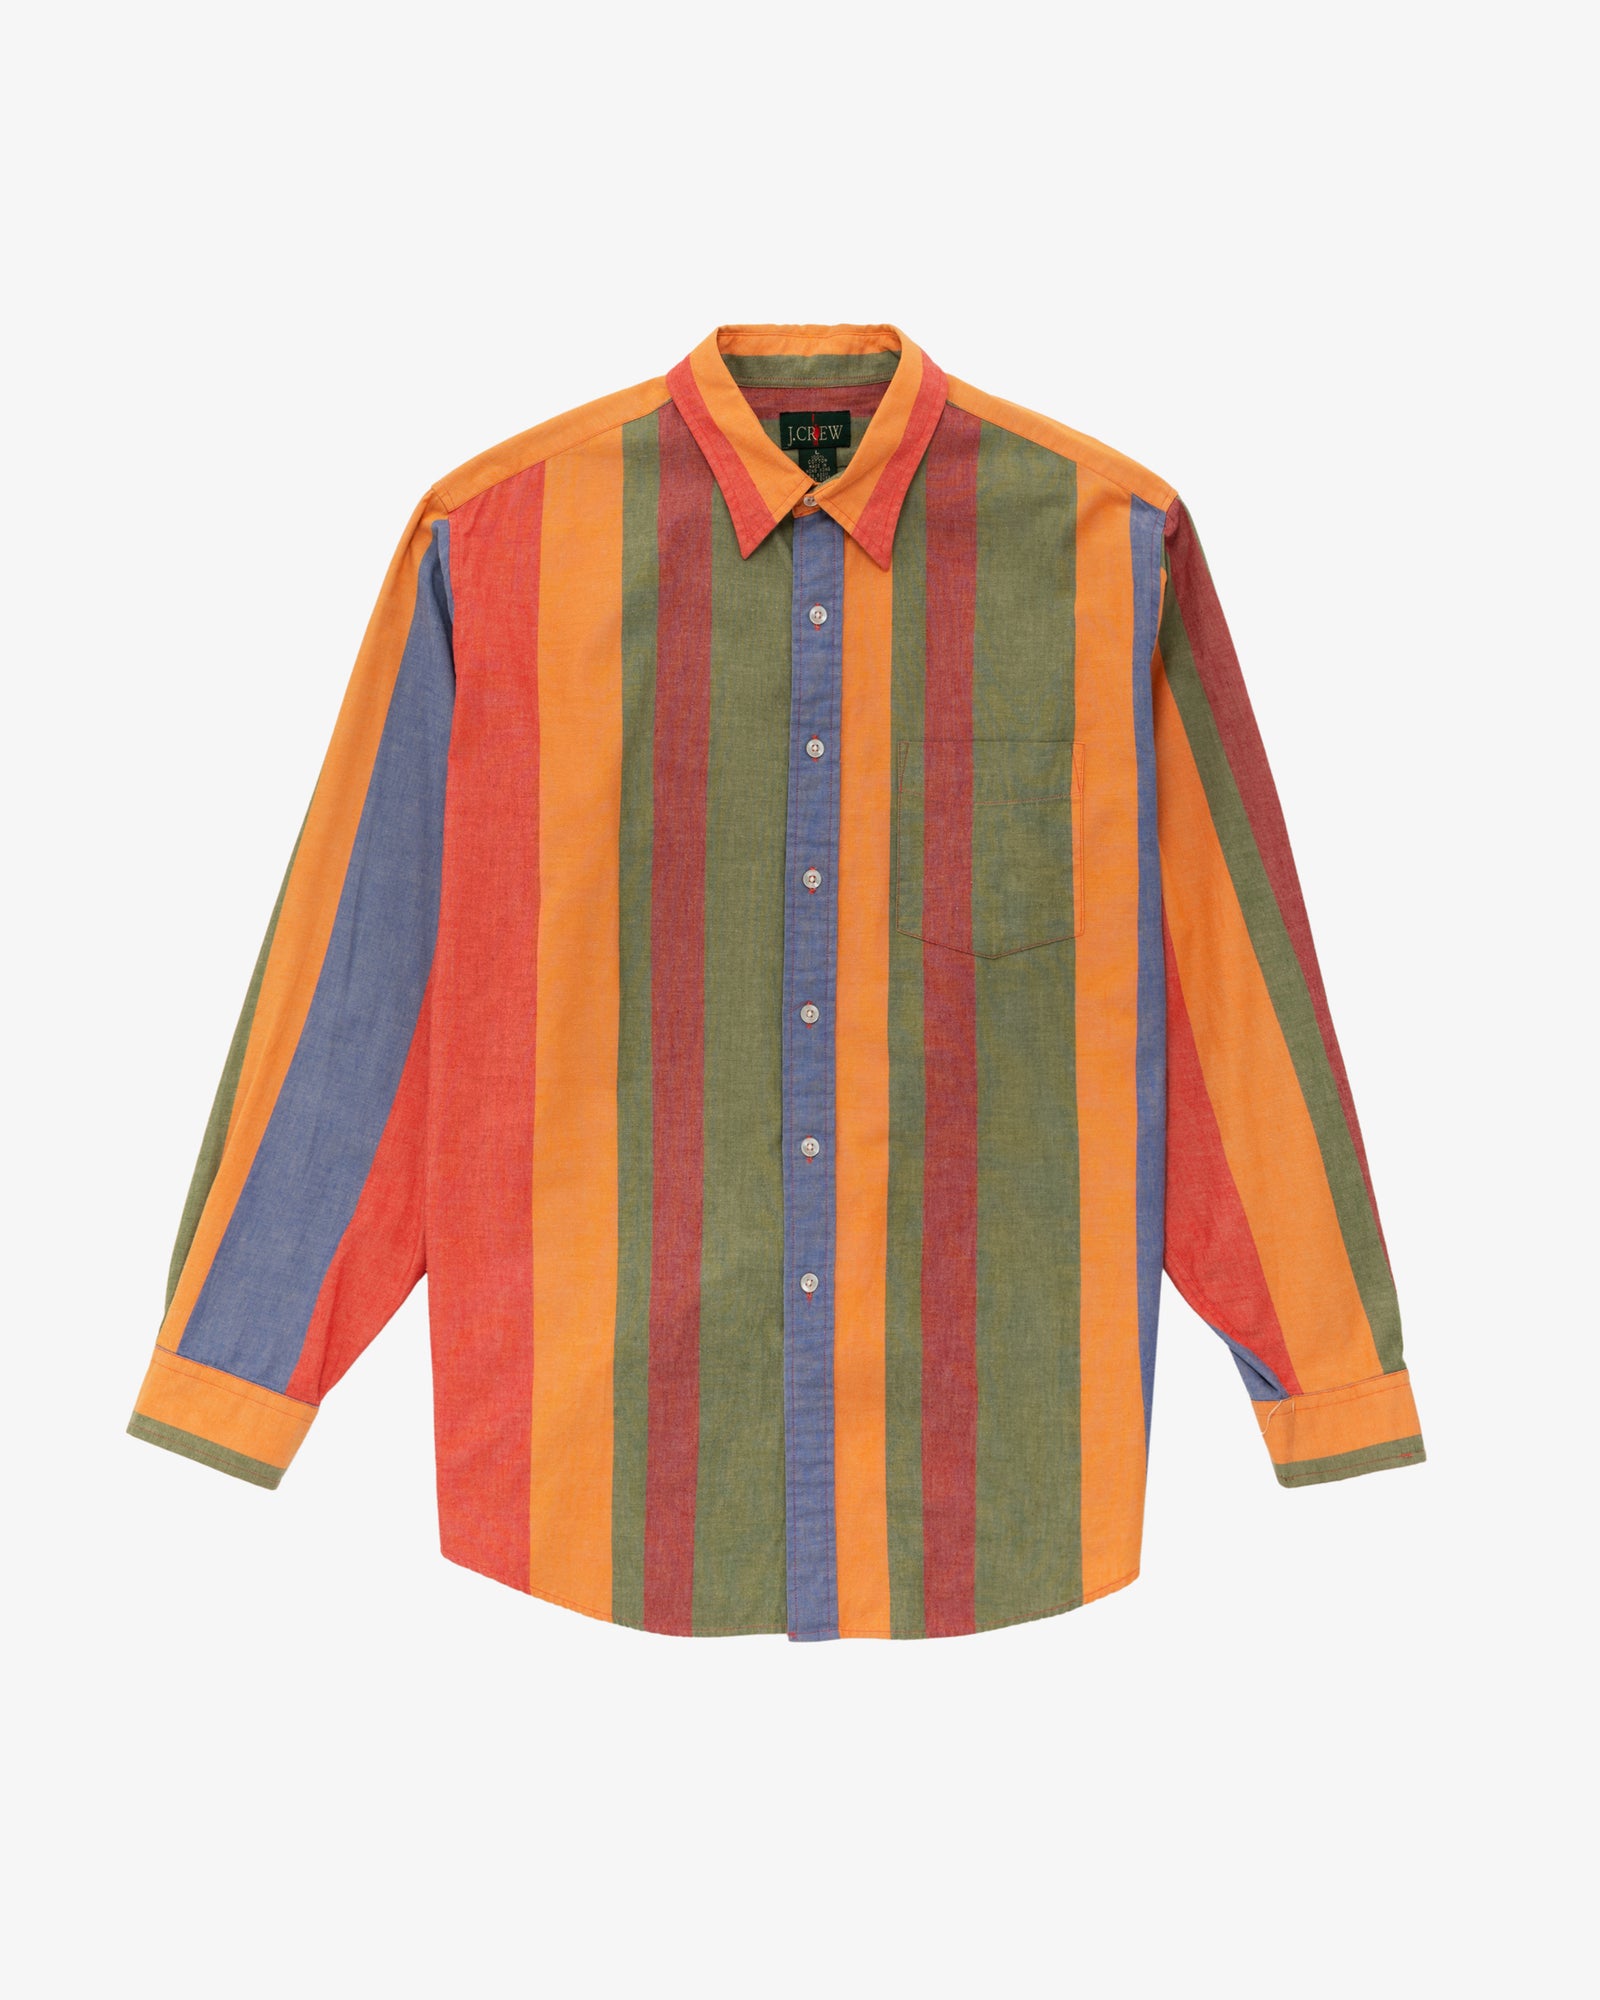 Vintage J.Crew Striped Shirt